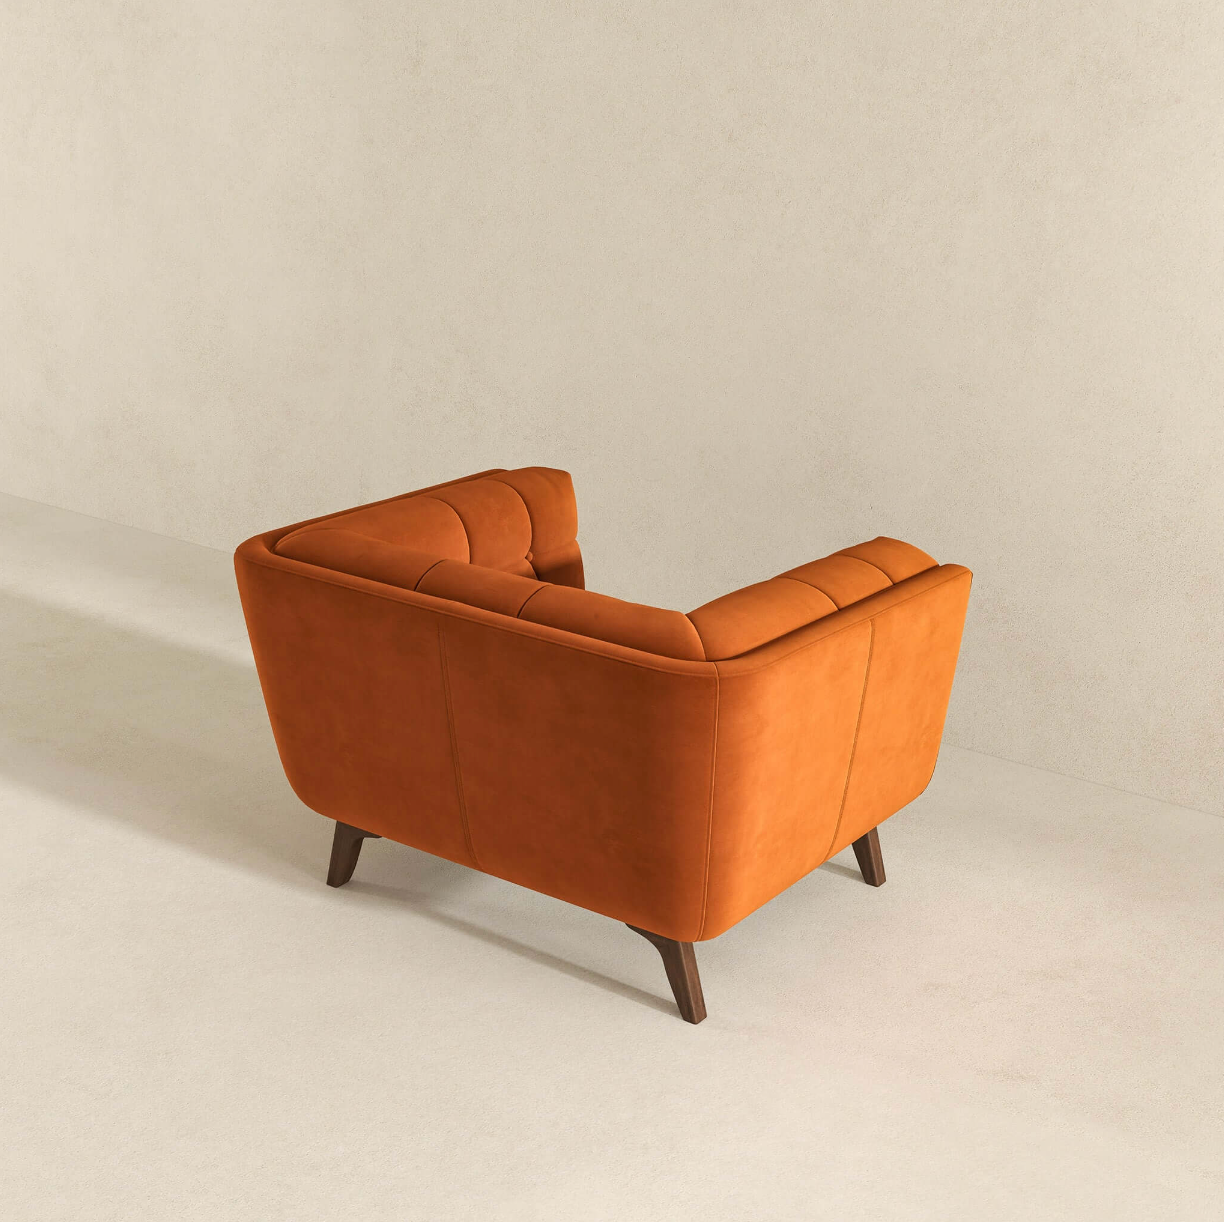 Addison MCM Styled Tufted Lounge Chair - Revel Sofa 